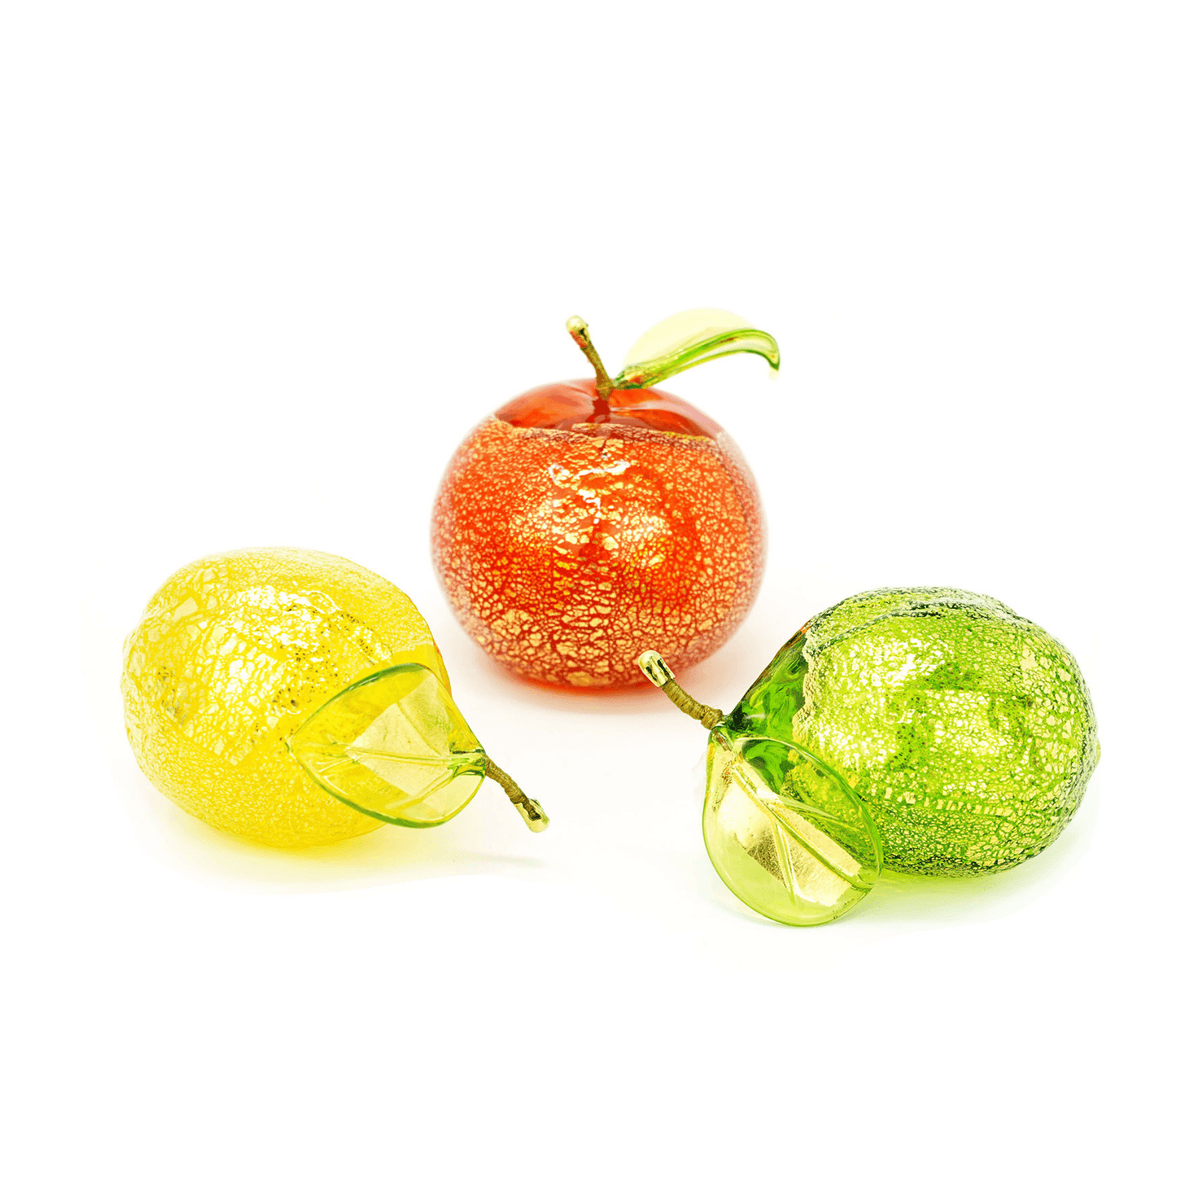 Murano Glass Citrus Bundle | Lemon, Lime and Orange, 24 karat gold finish at MyItalianDecor